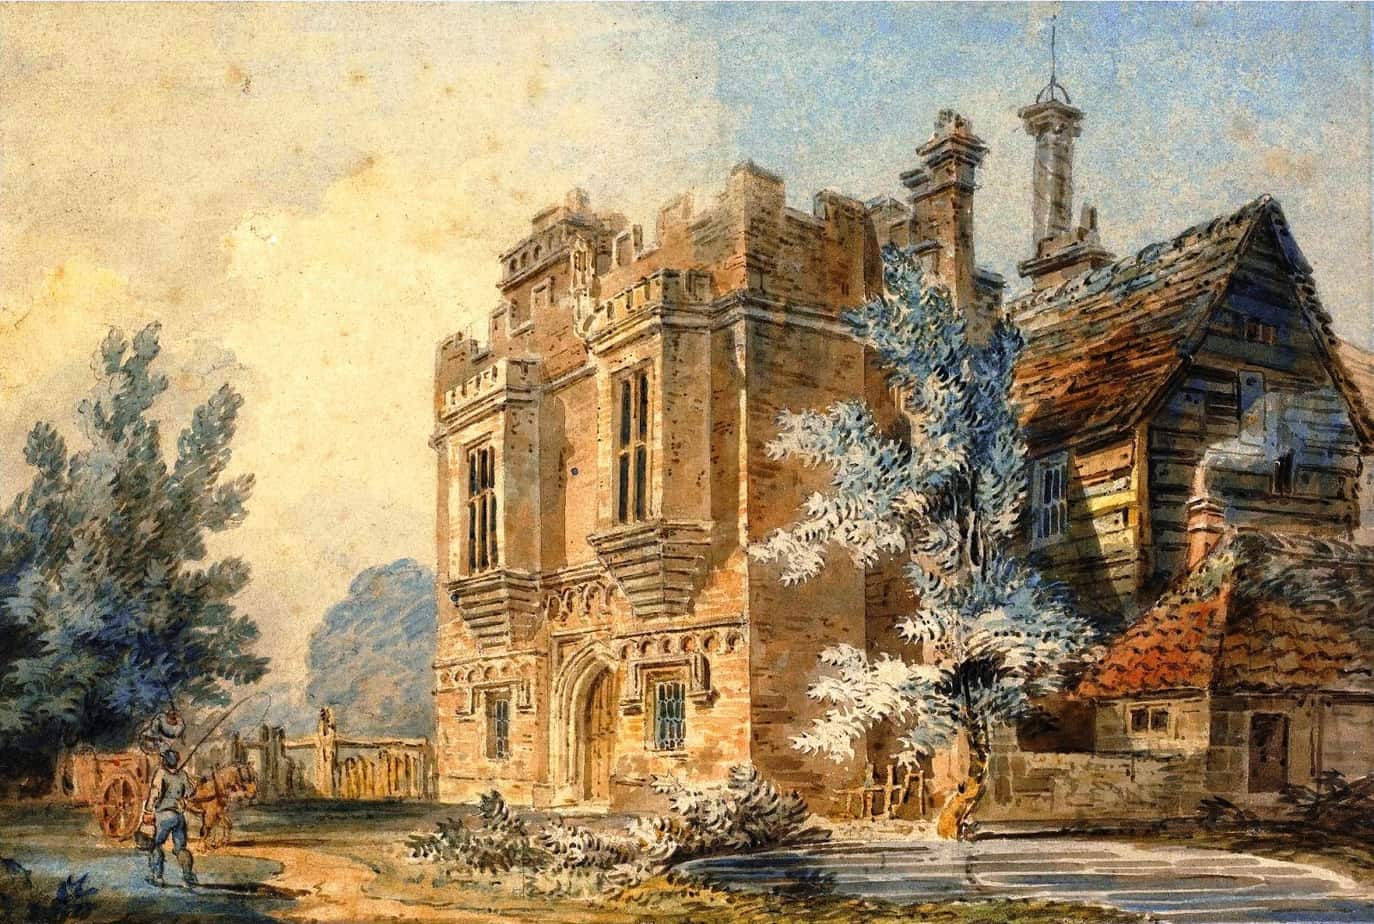 Joseph Mallord William Turner: View of the Gatehouse at Rye House, Hertfordshire.